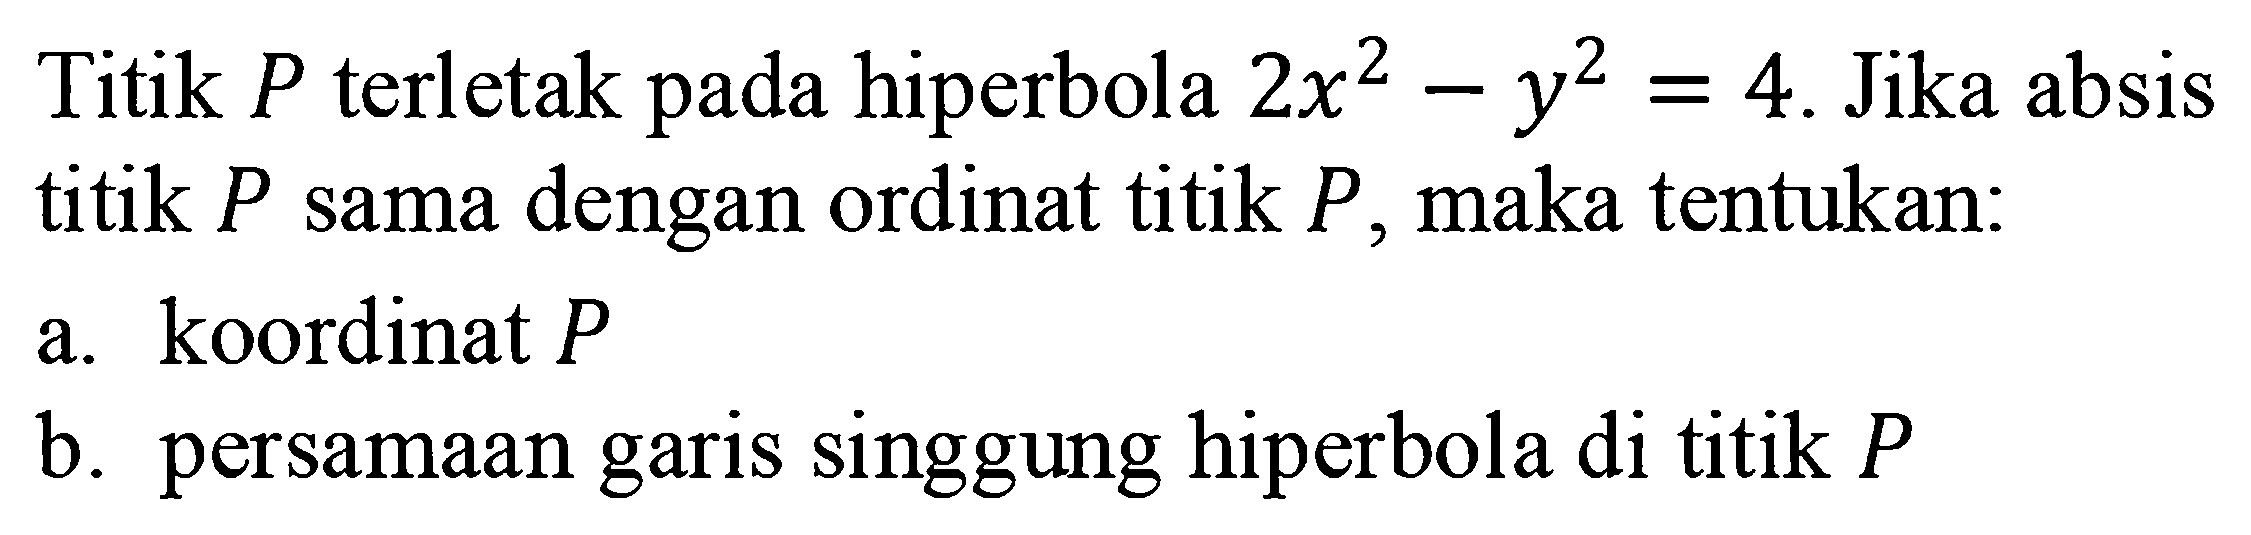 Titik P terletak pada hiperbola 2x^2-y^2=4. Jika absis titik P sama dengan ordinat titik P, maka tentukan: a. koordinat P b. persamaan garis singgung hiperbola di titik P.